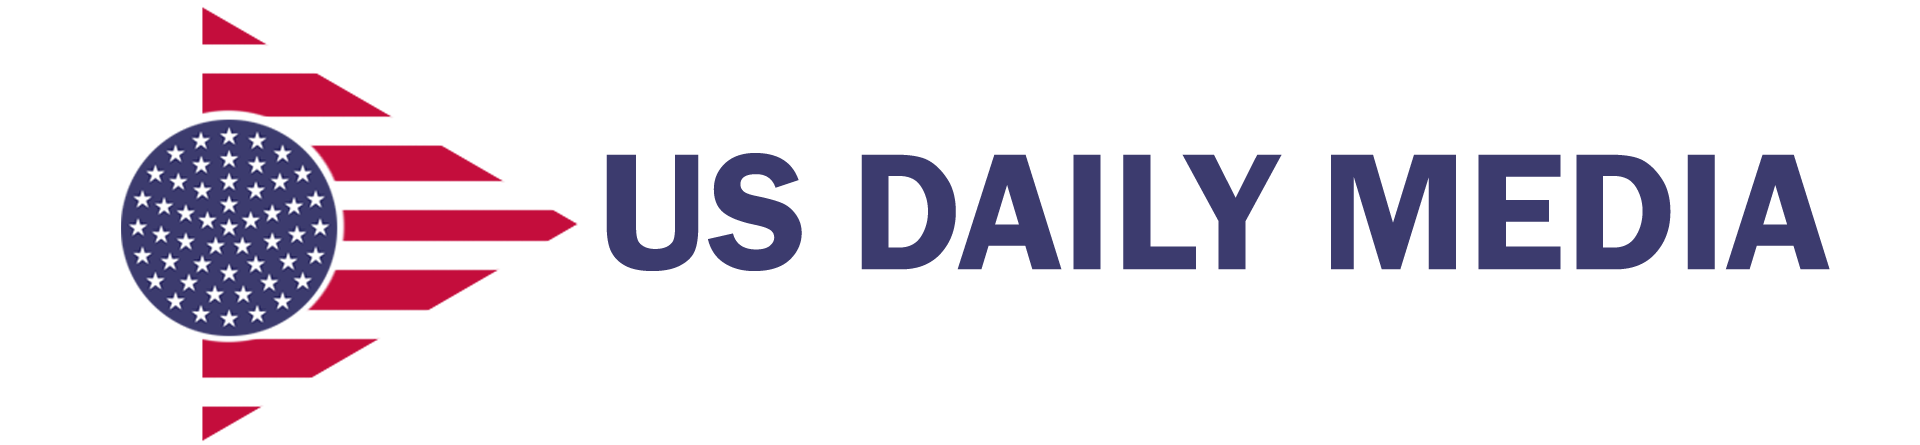 U.S. Daily Media